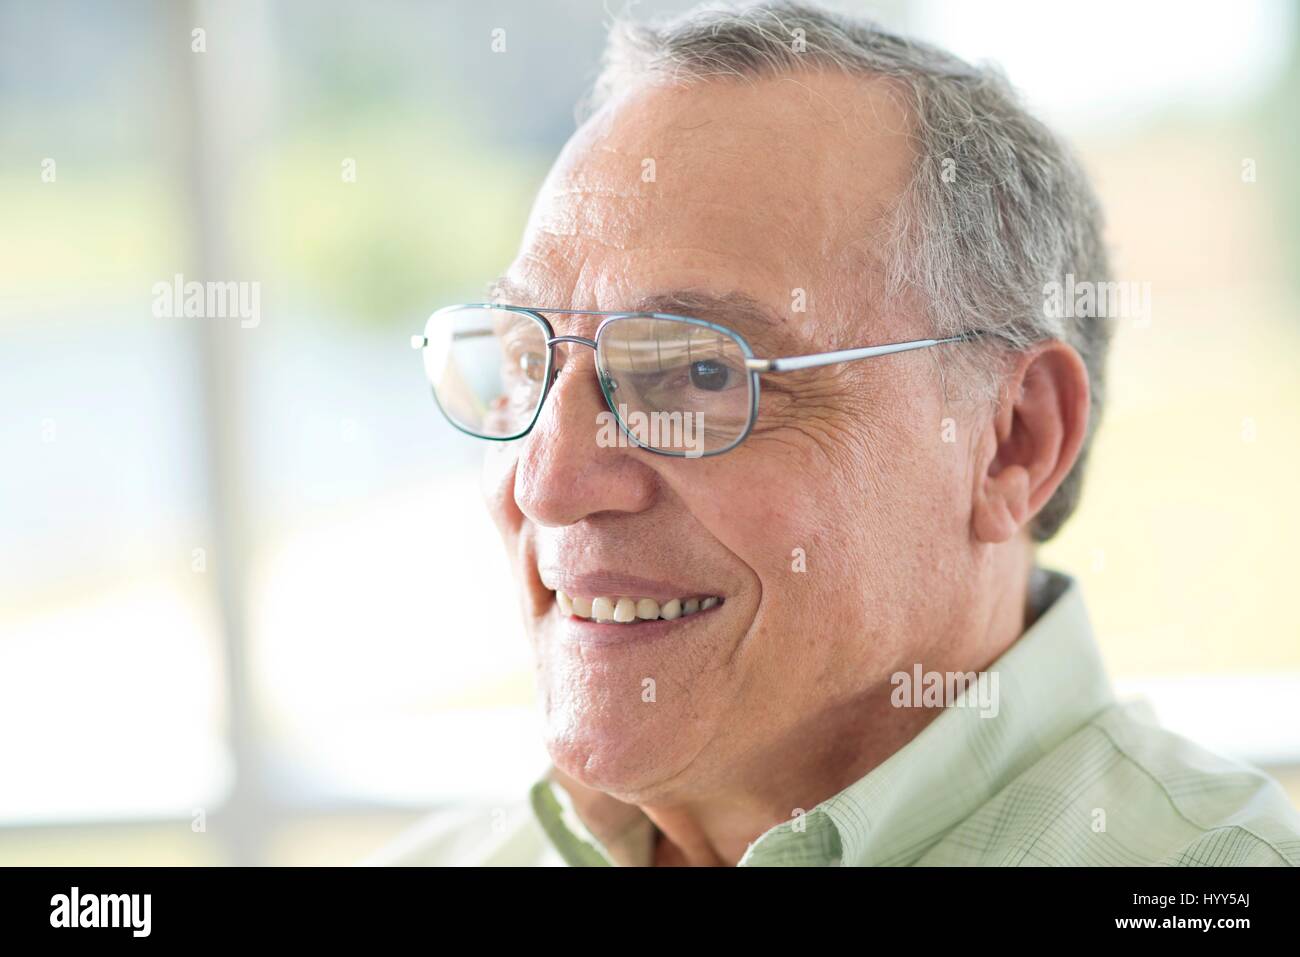 Senior man wearing glasses, portrait. Stock Photo